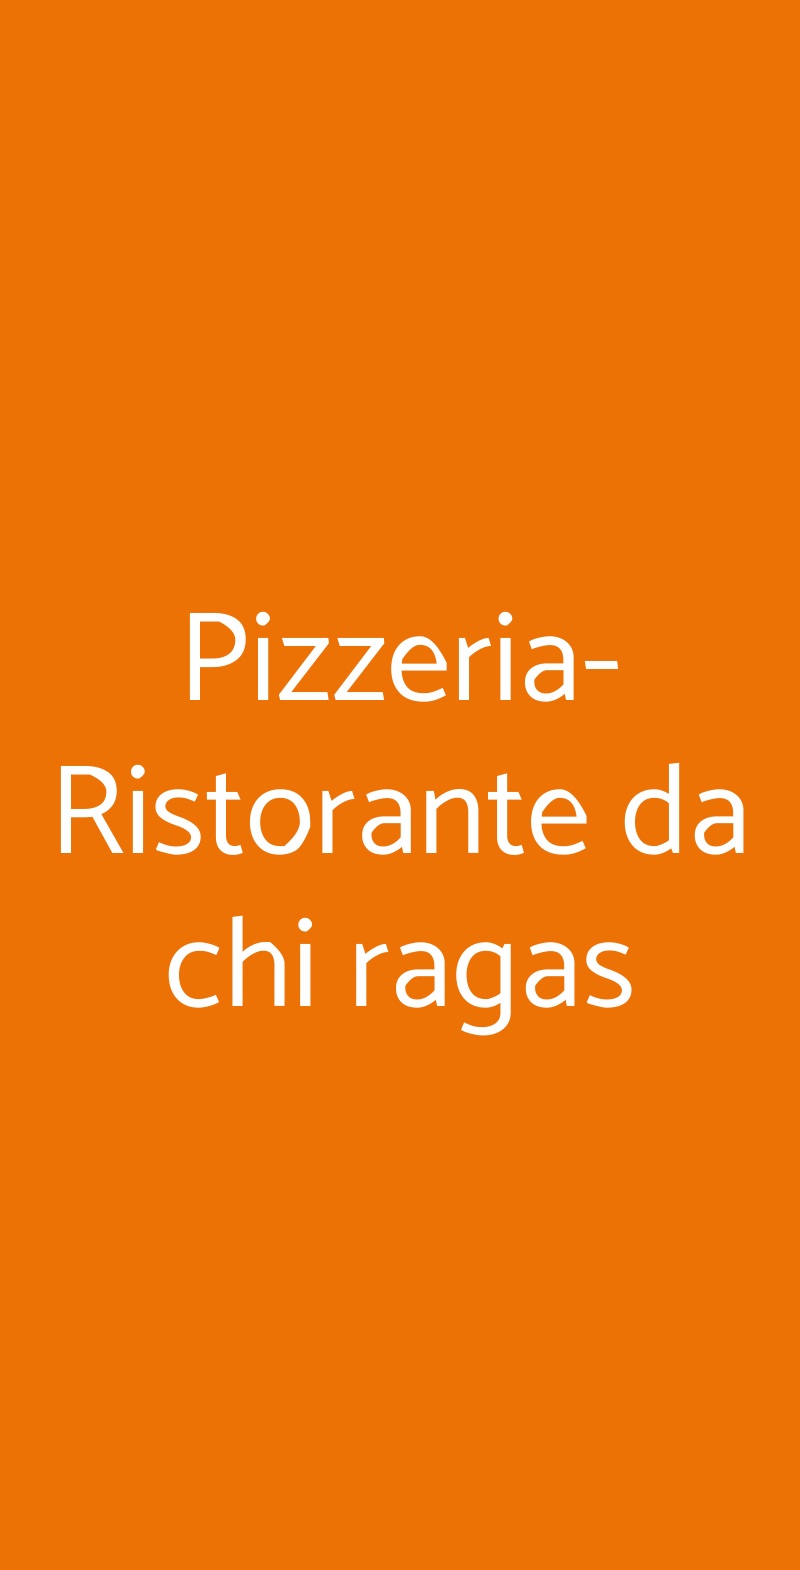 Pizzeria-Ristorante da chi ragas Parma menù 1 pagina